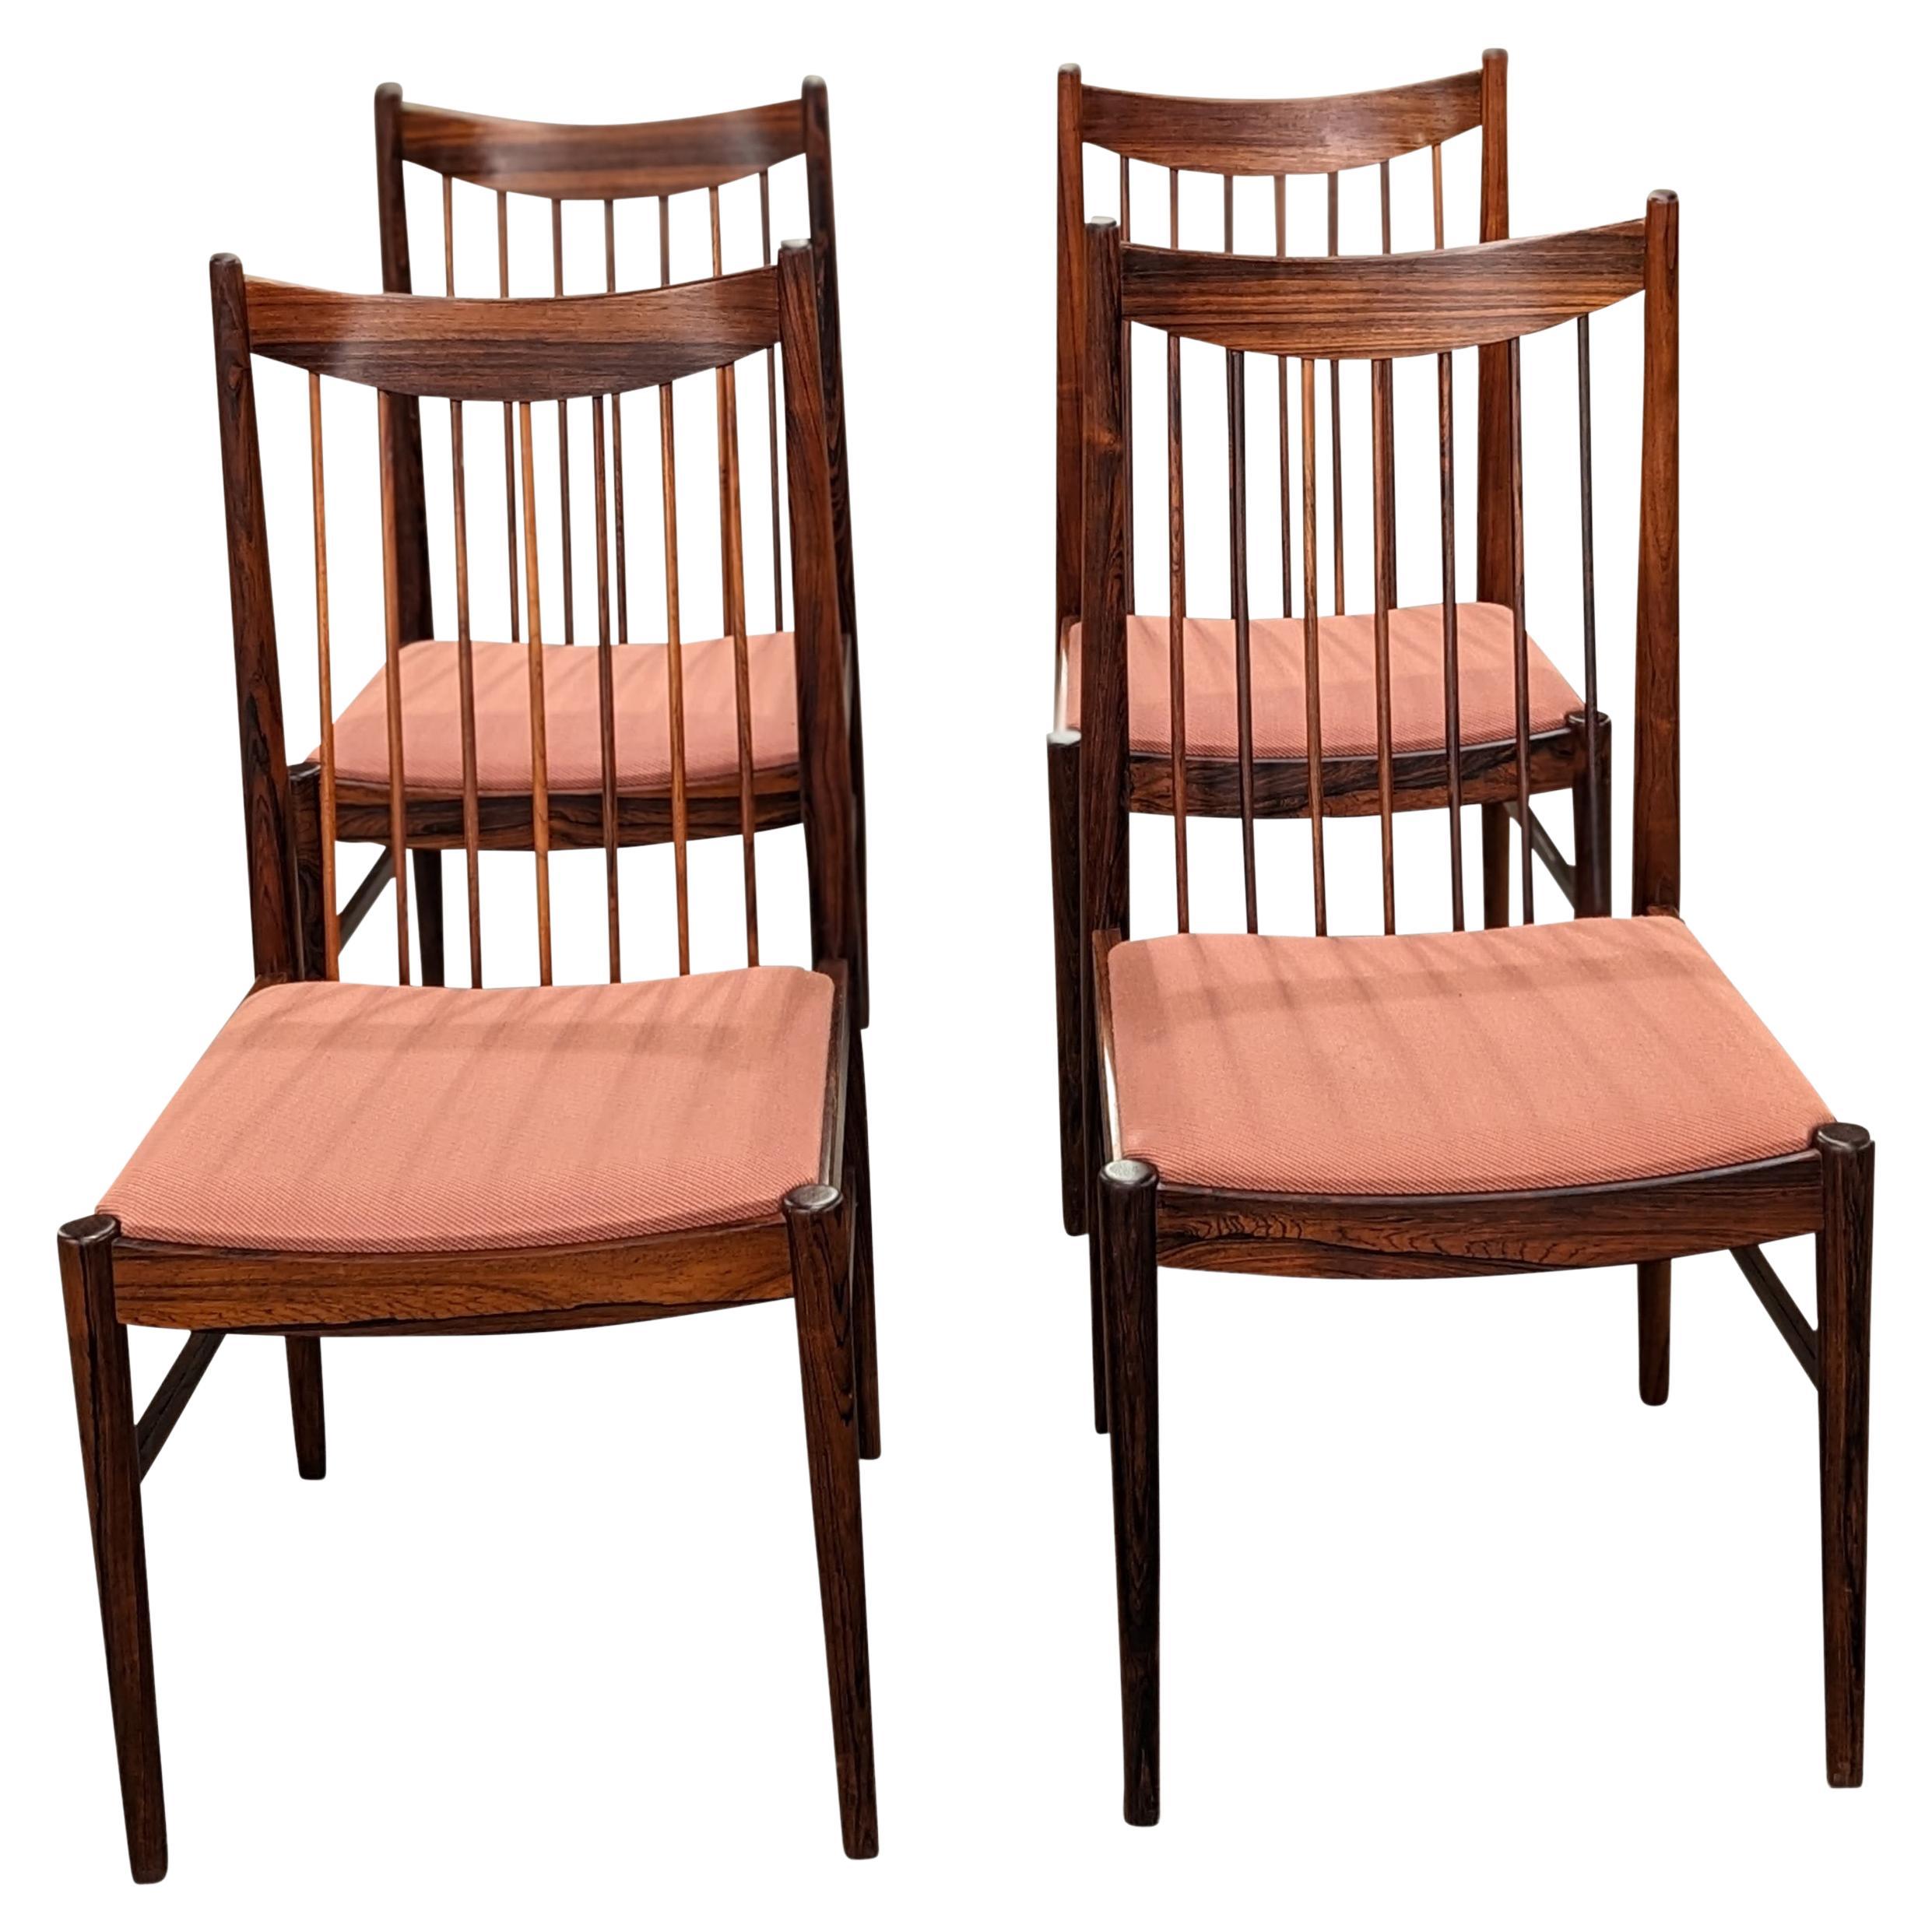 4 Arne Vodder / Sibast Rosewood Chair, 012323 Vintage Danish Midcentury